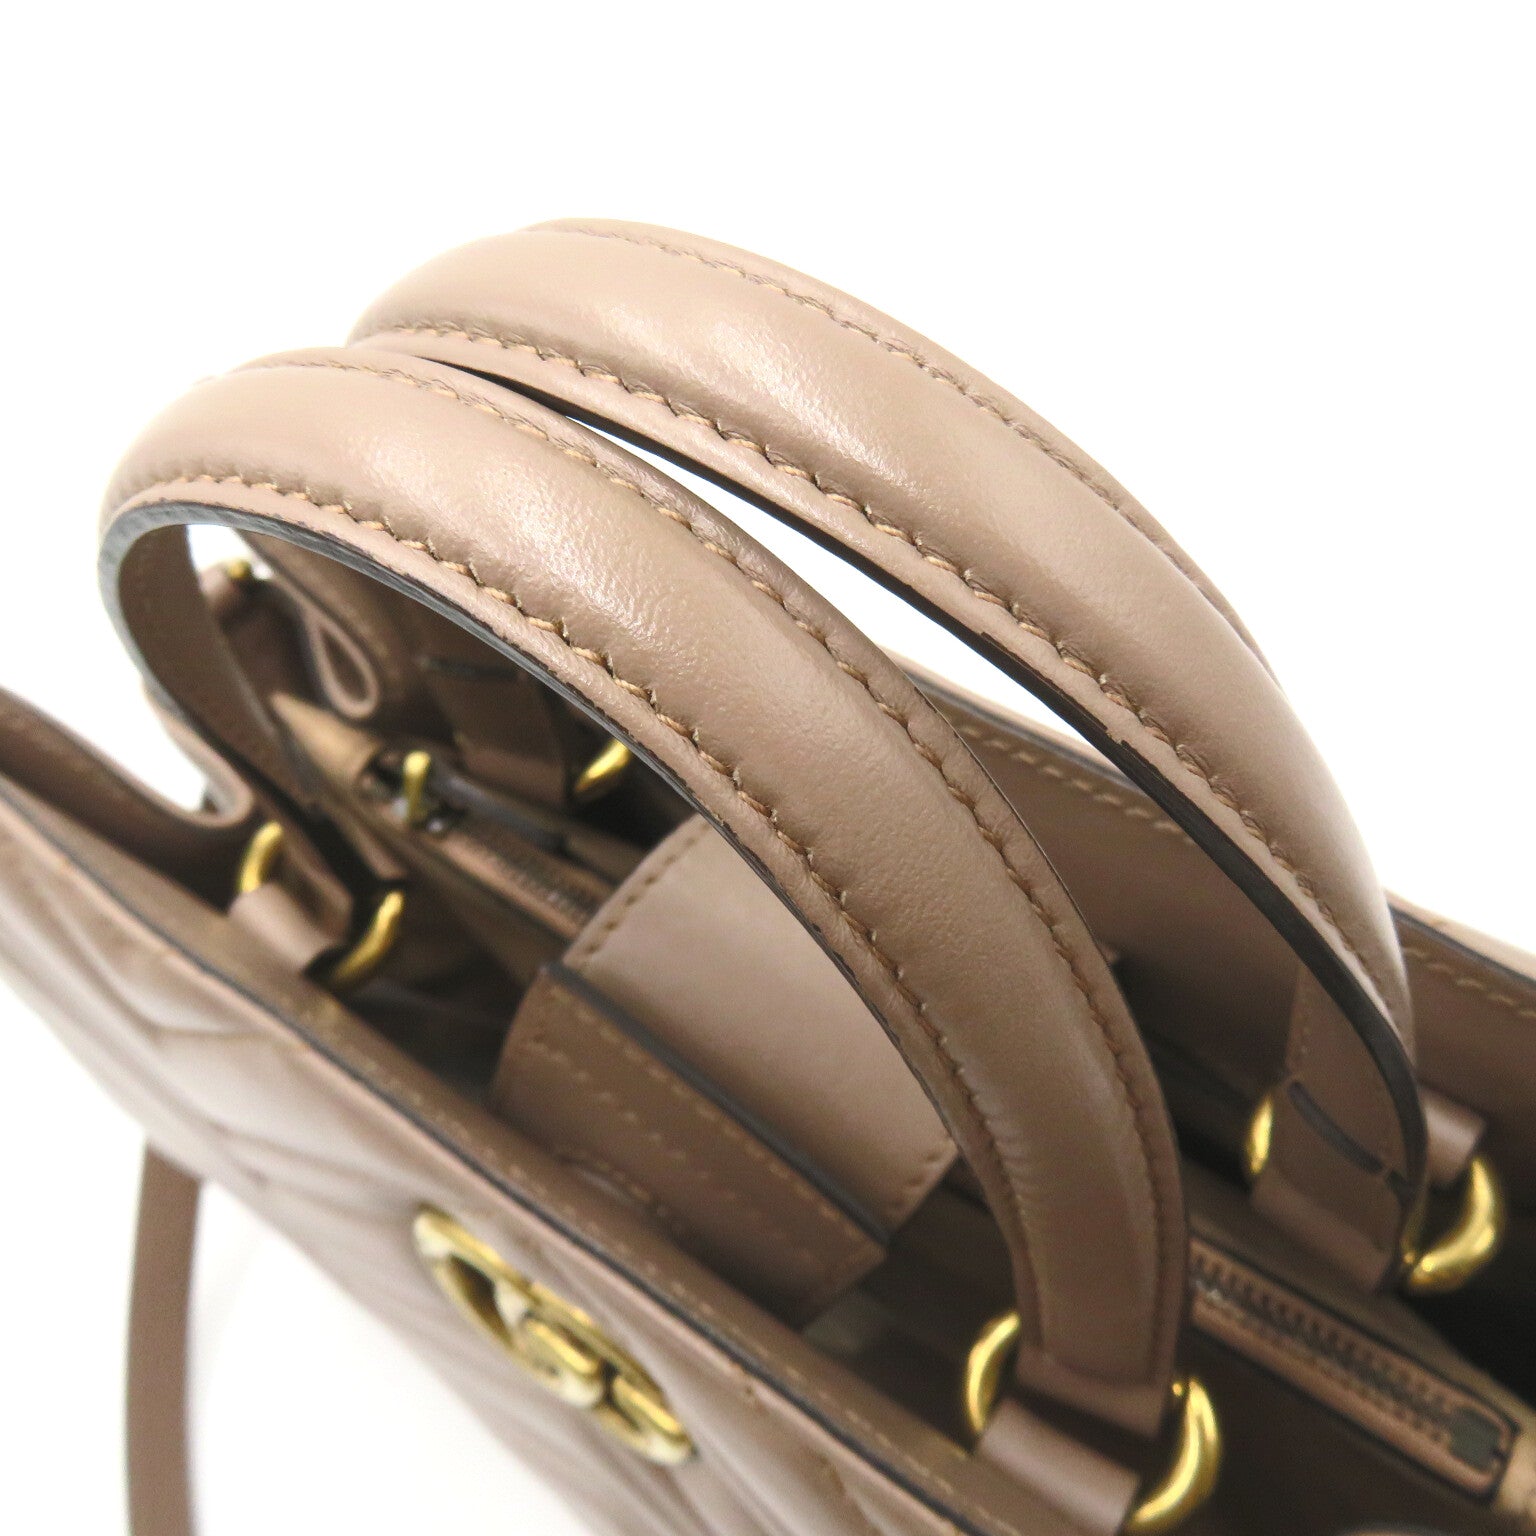 Gucci GG Marmont Handbag Handbag Handbag Leather  Beige Pink Beige 448054